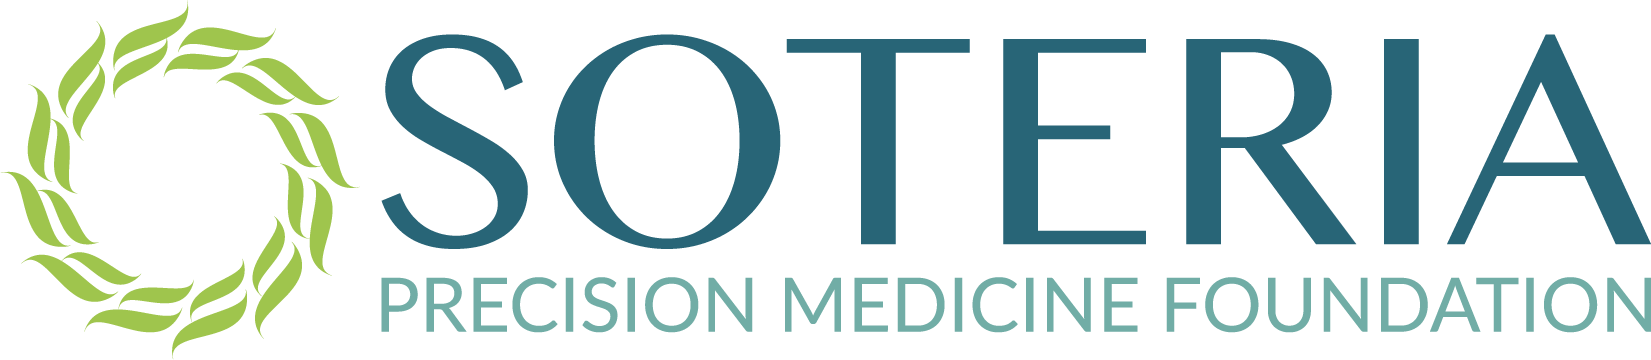 Soteria Precision Medicine Foundation